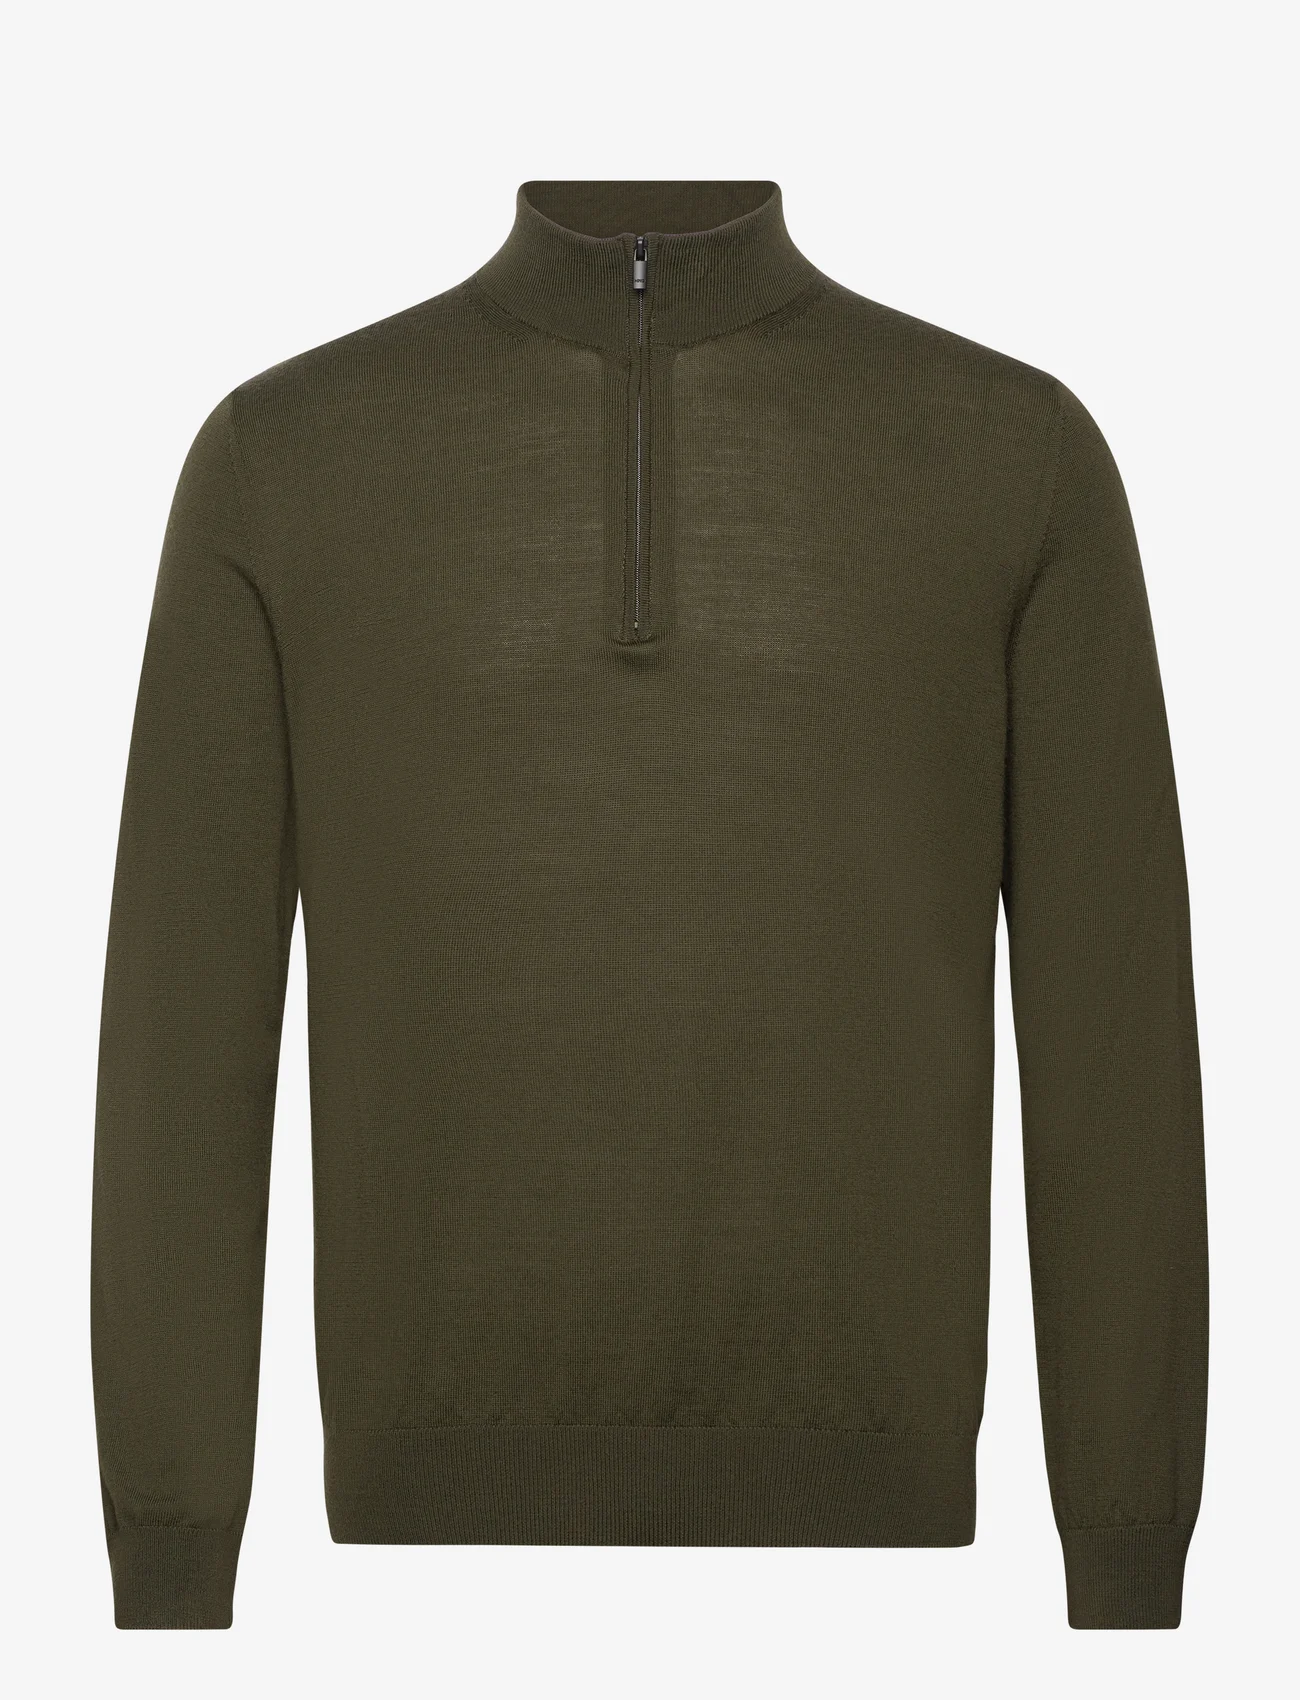 Mango - 100% merino wool sweater with zip collar - mænd - beige - khaki - 0